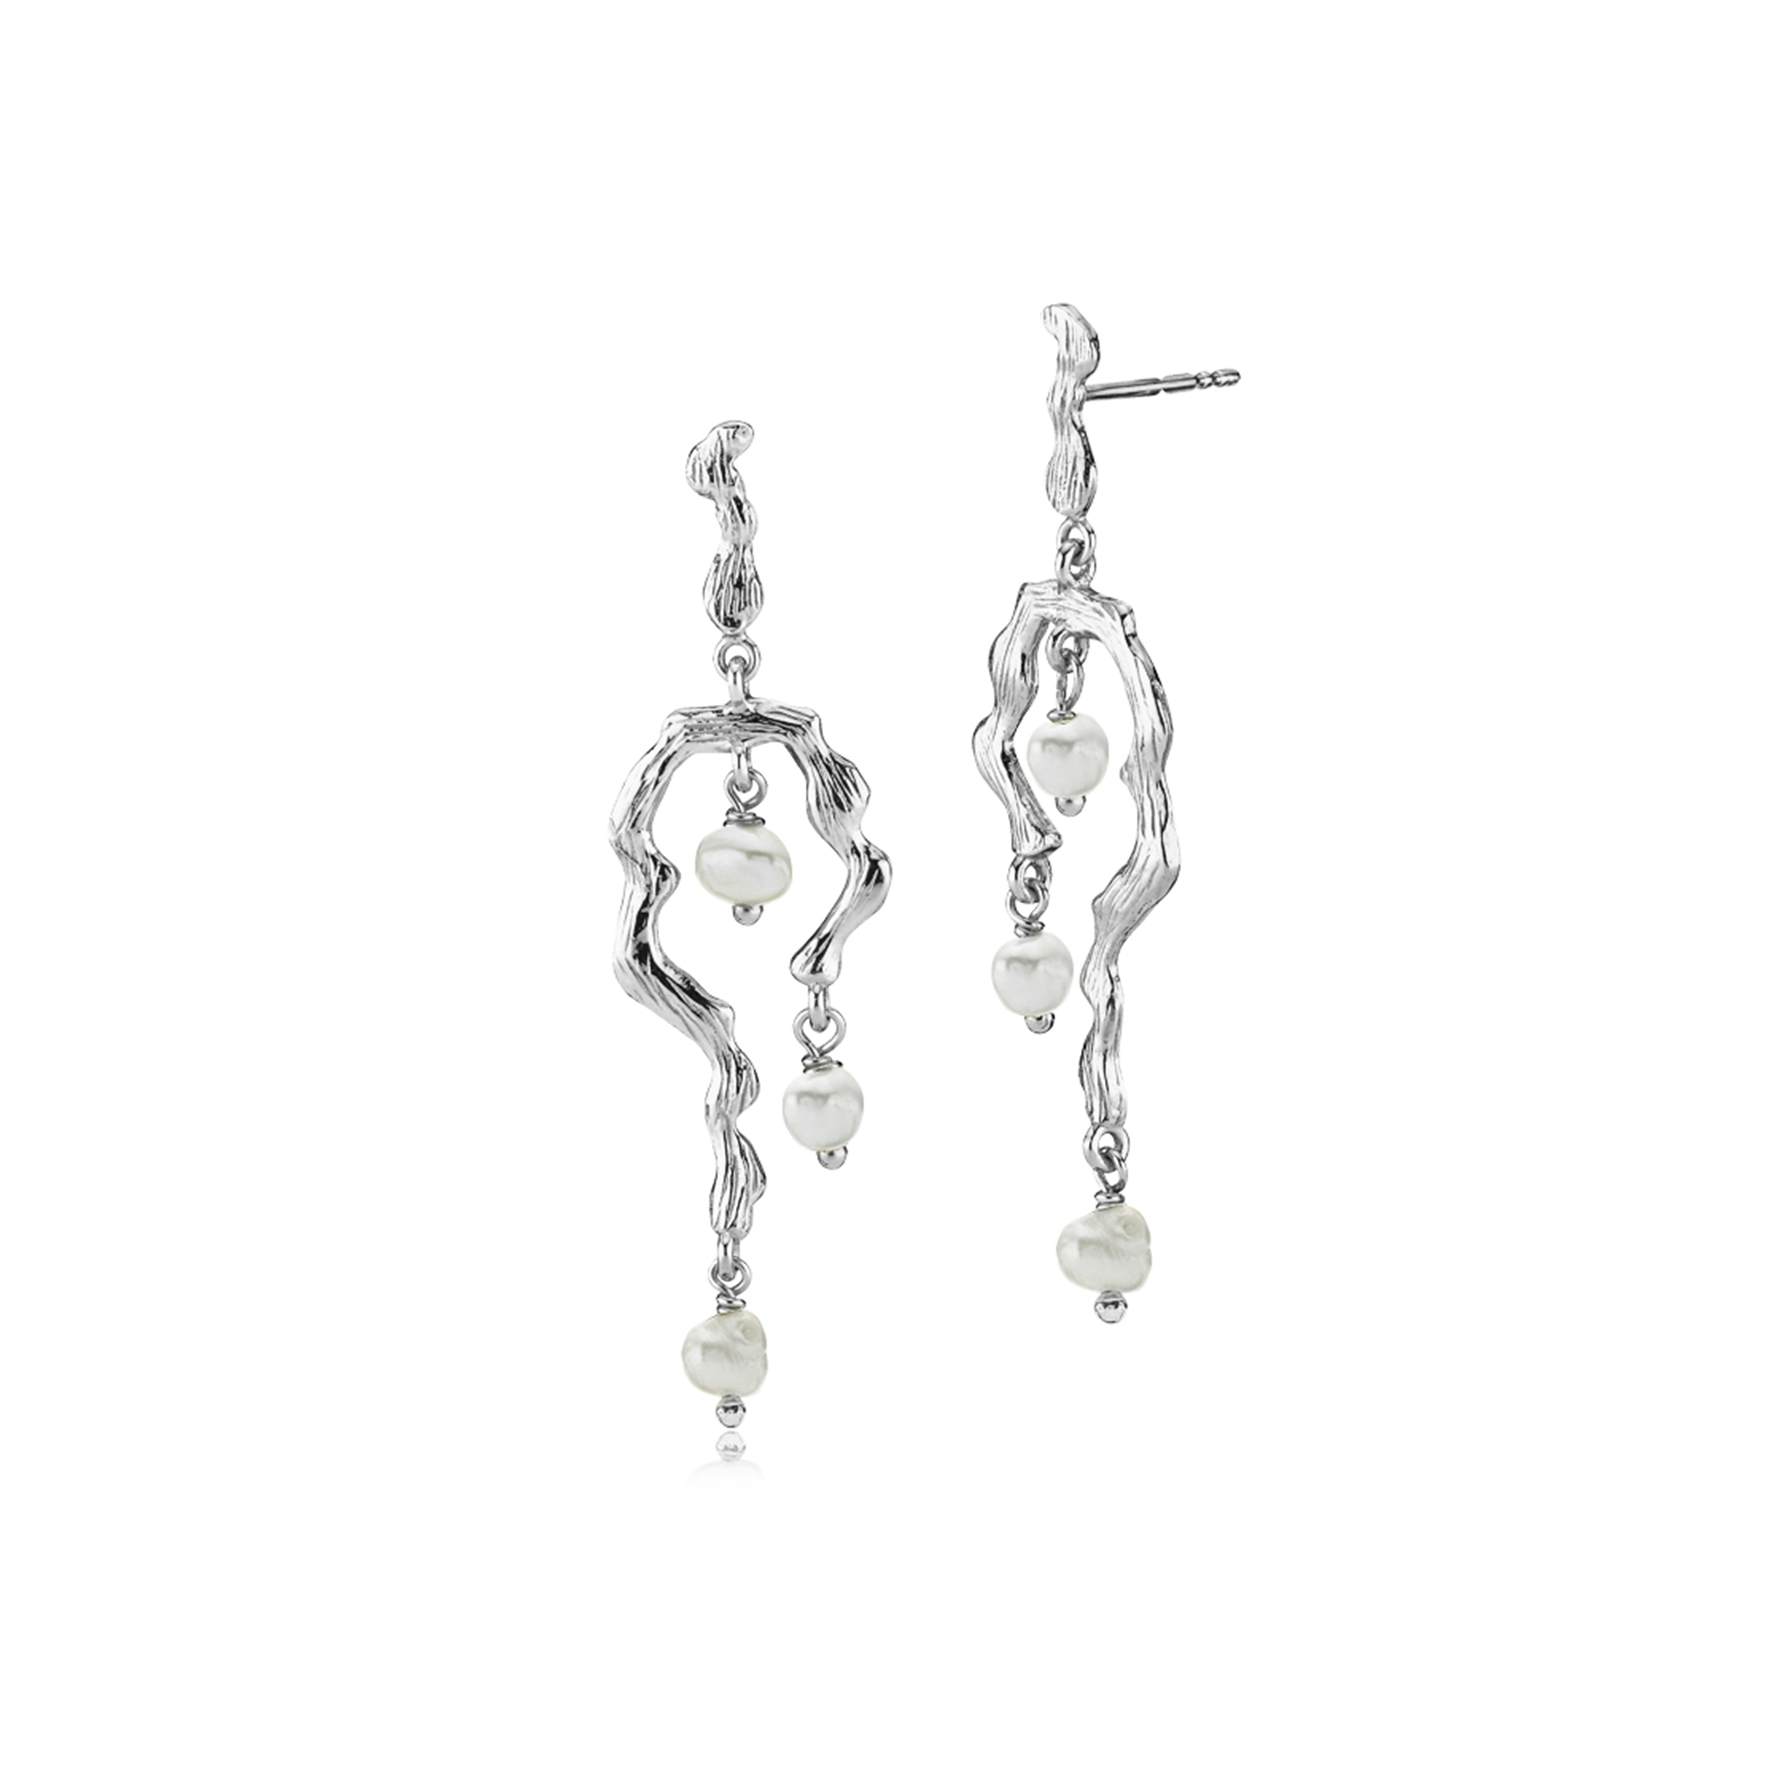 Lærke Bentsen By Sistie Long Earrings With Pearls från Sistie i Silver Sterling 925|Freshwater Pearl